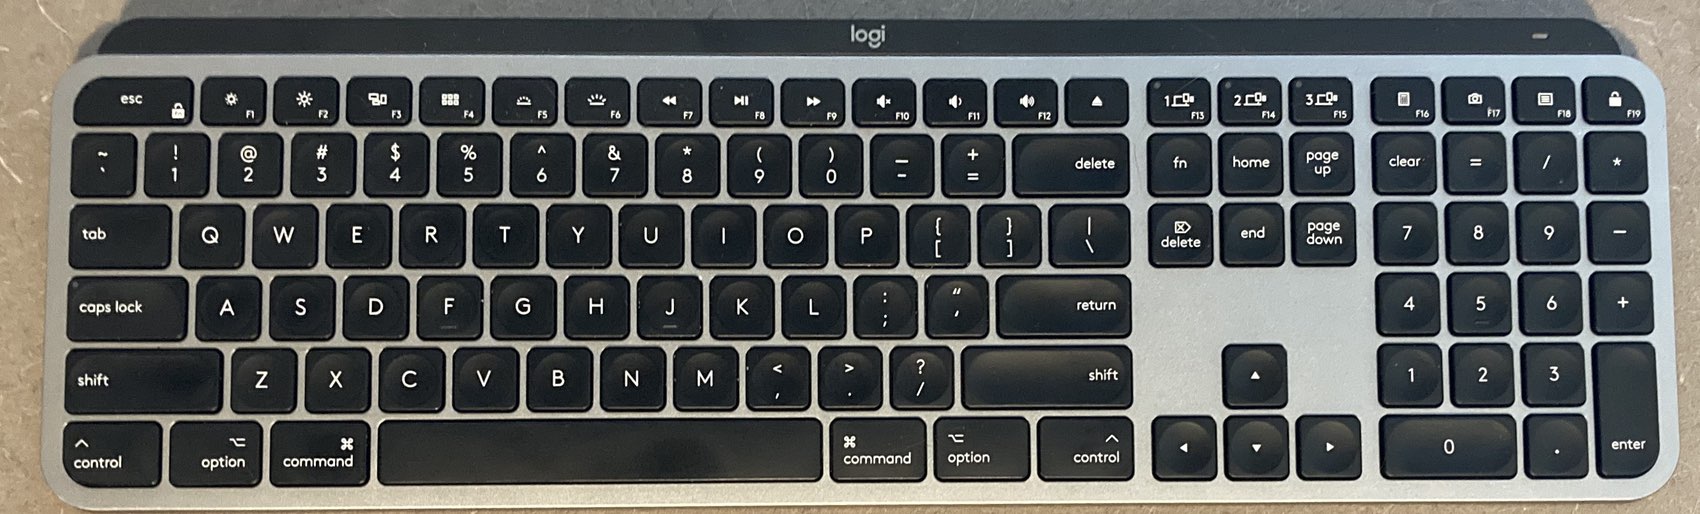 How To Use Function Keys On Logitech Mx Keys